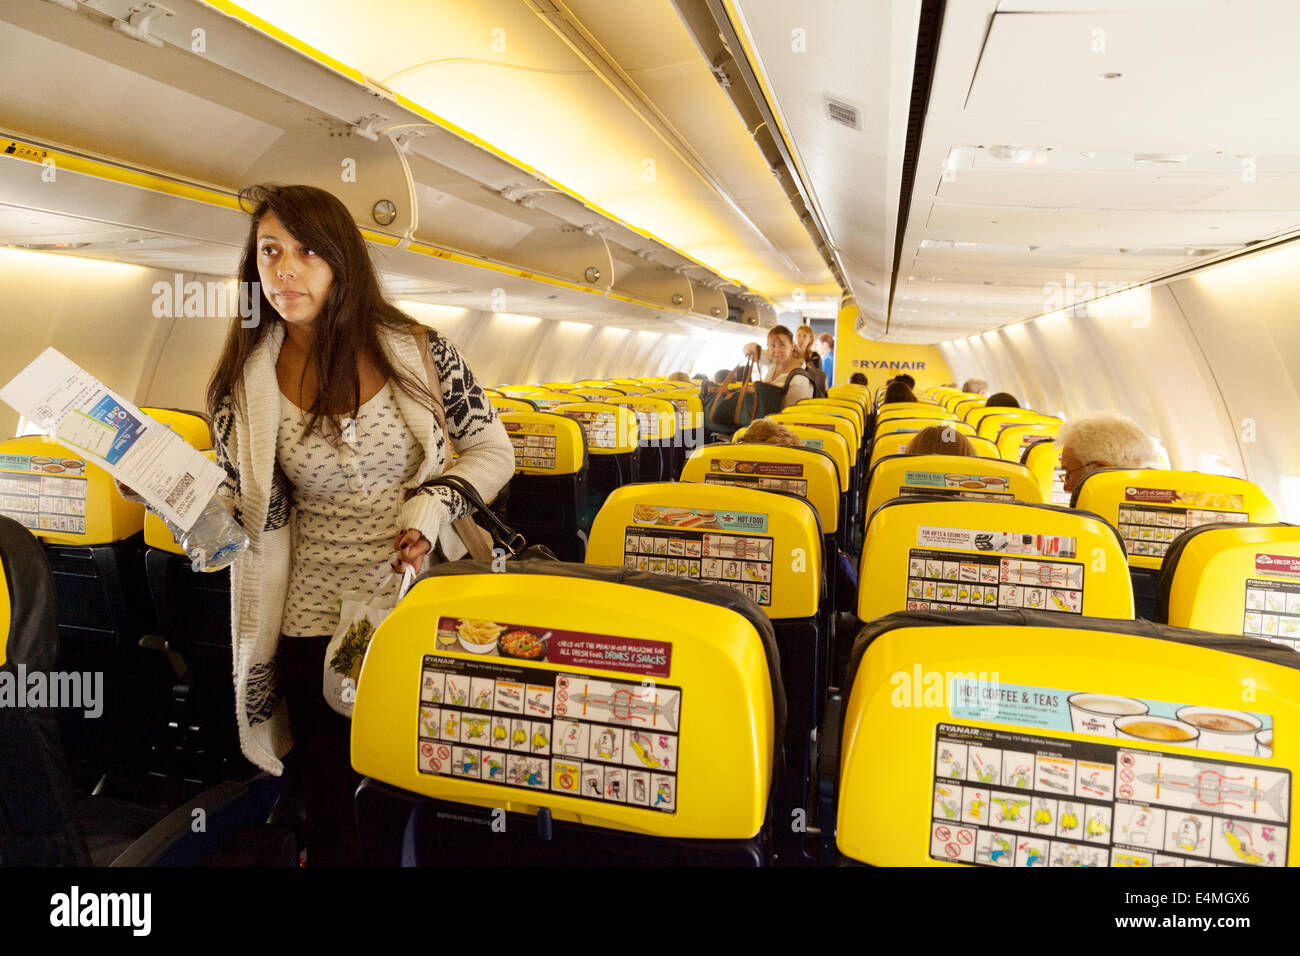 Ryanair inside plane passengers fotografías e imágenes de alta resolución -  Alamy